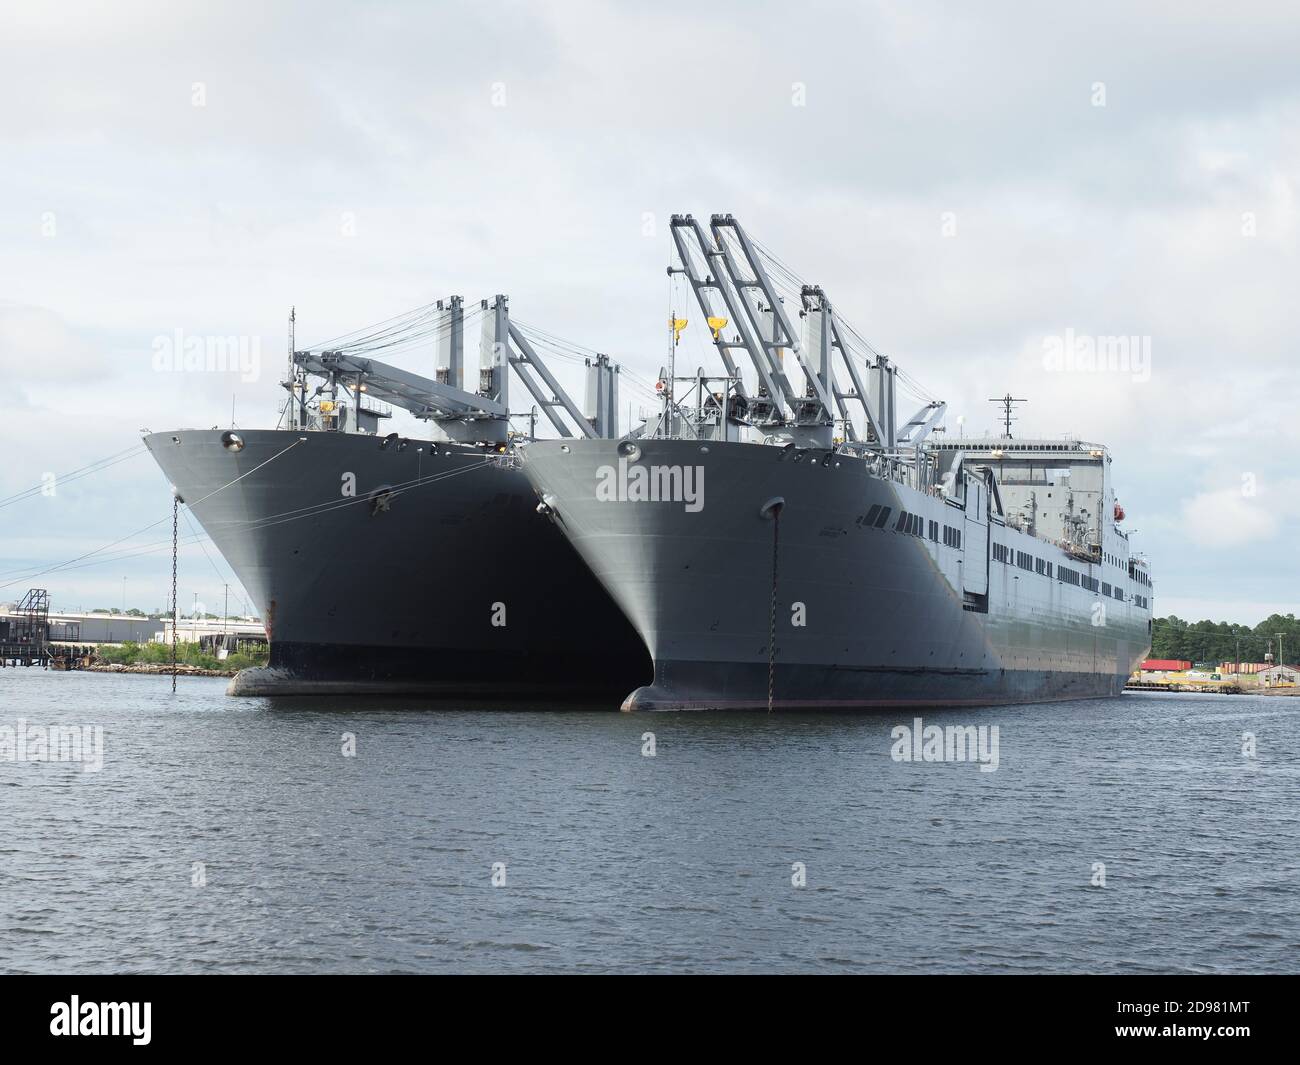 Benavidez and Mendonca ships. Stock Photo